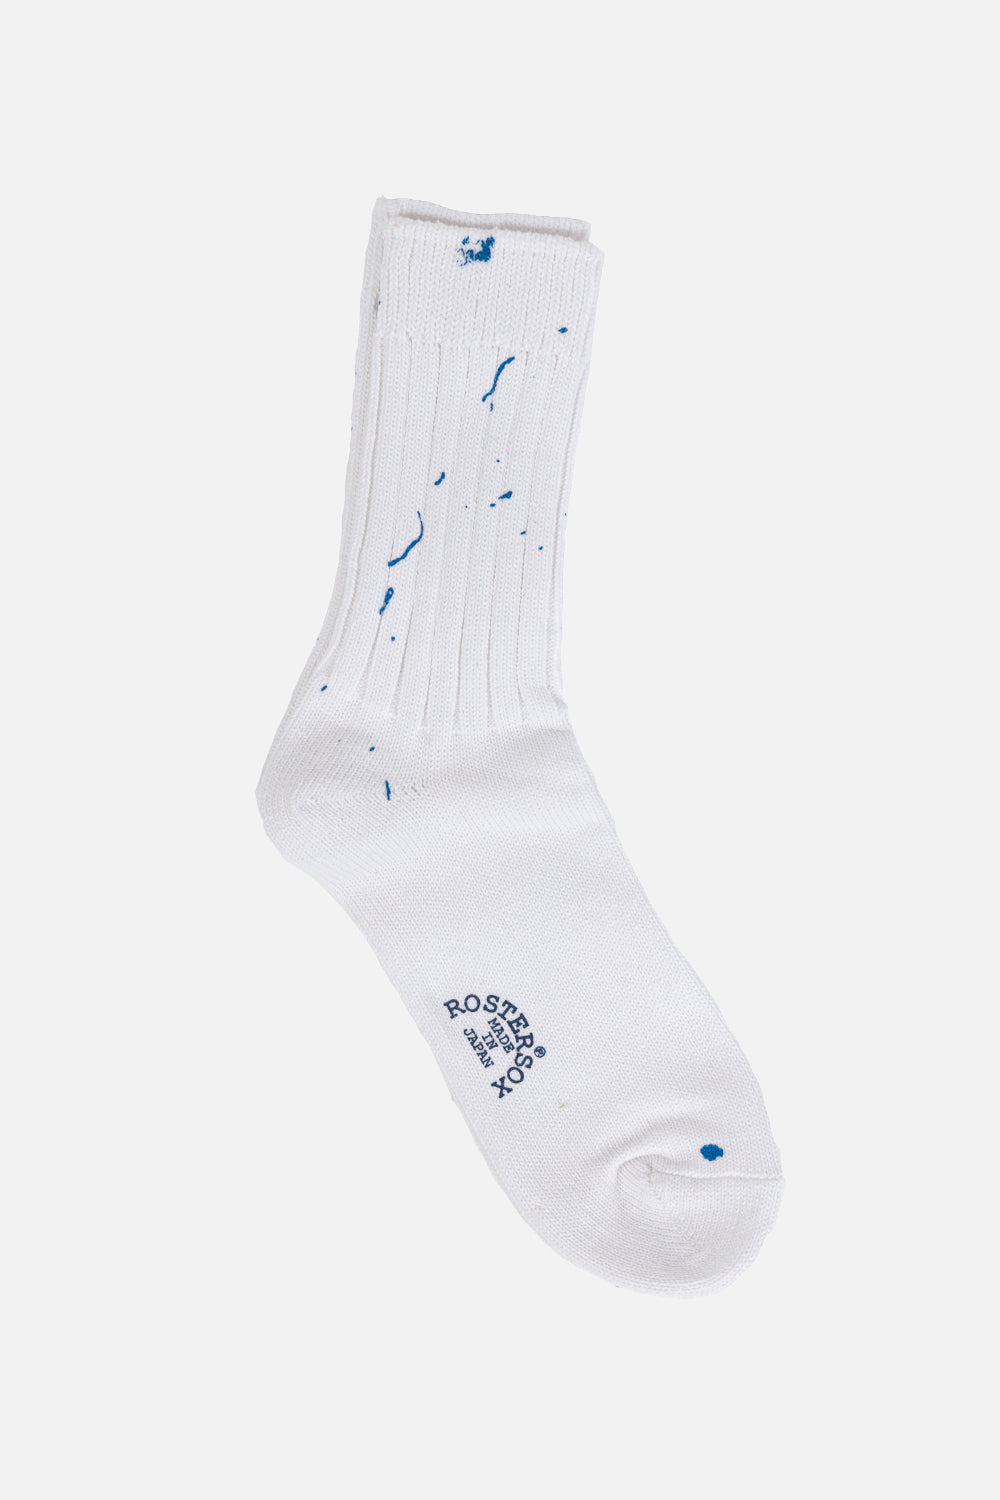 Rostersox-paint-socks-blue-white